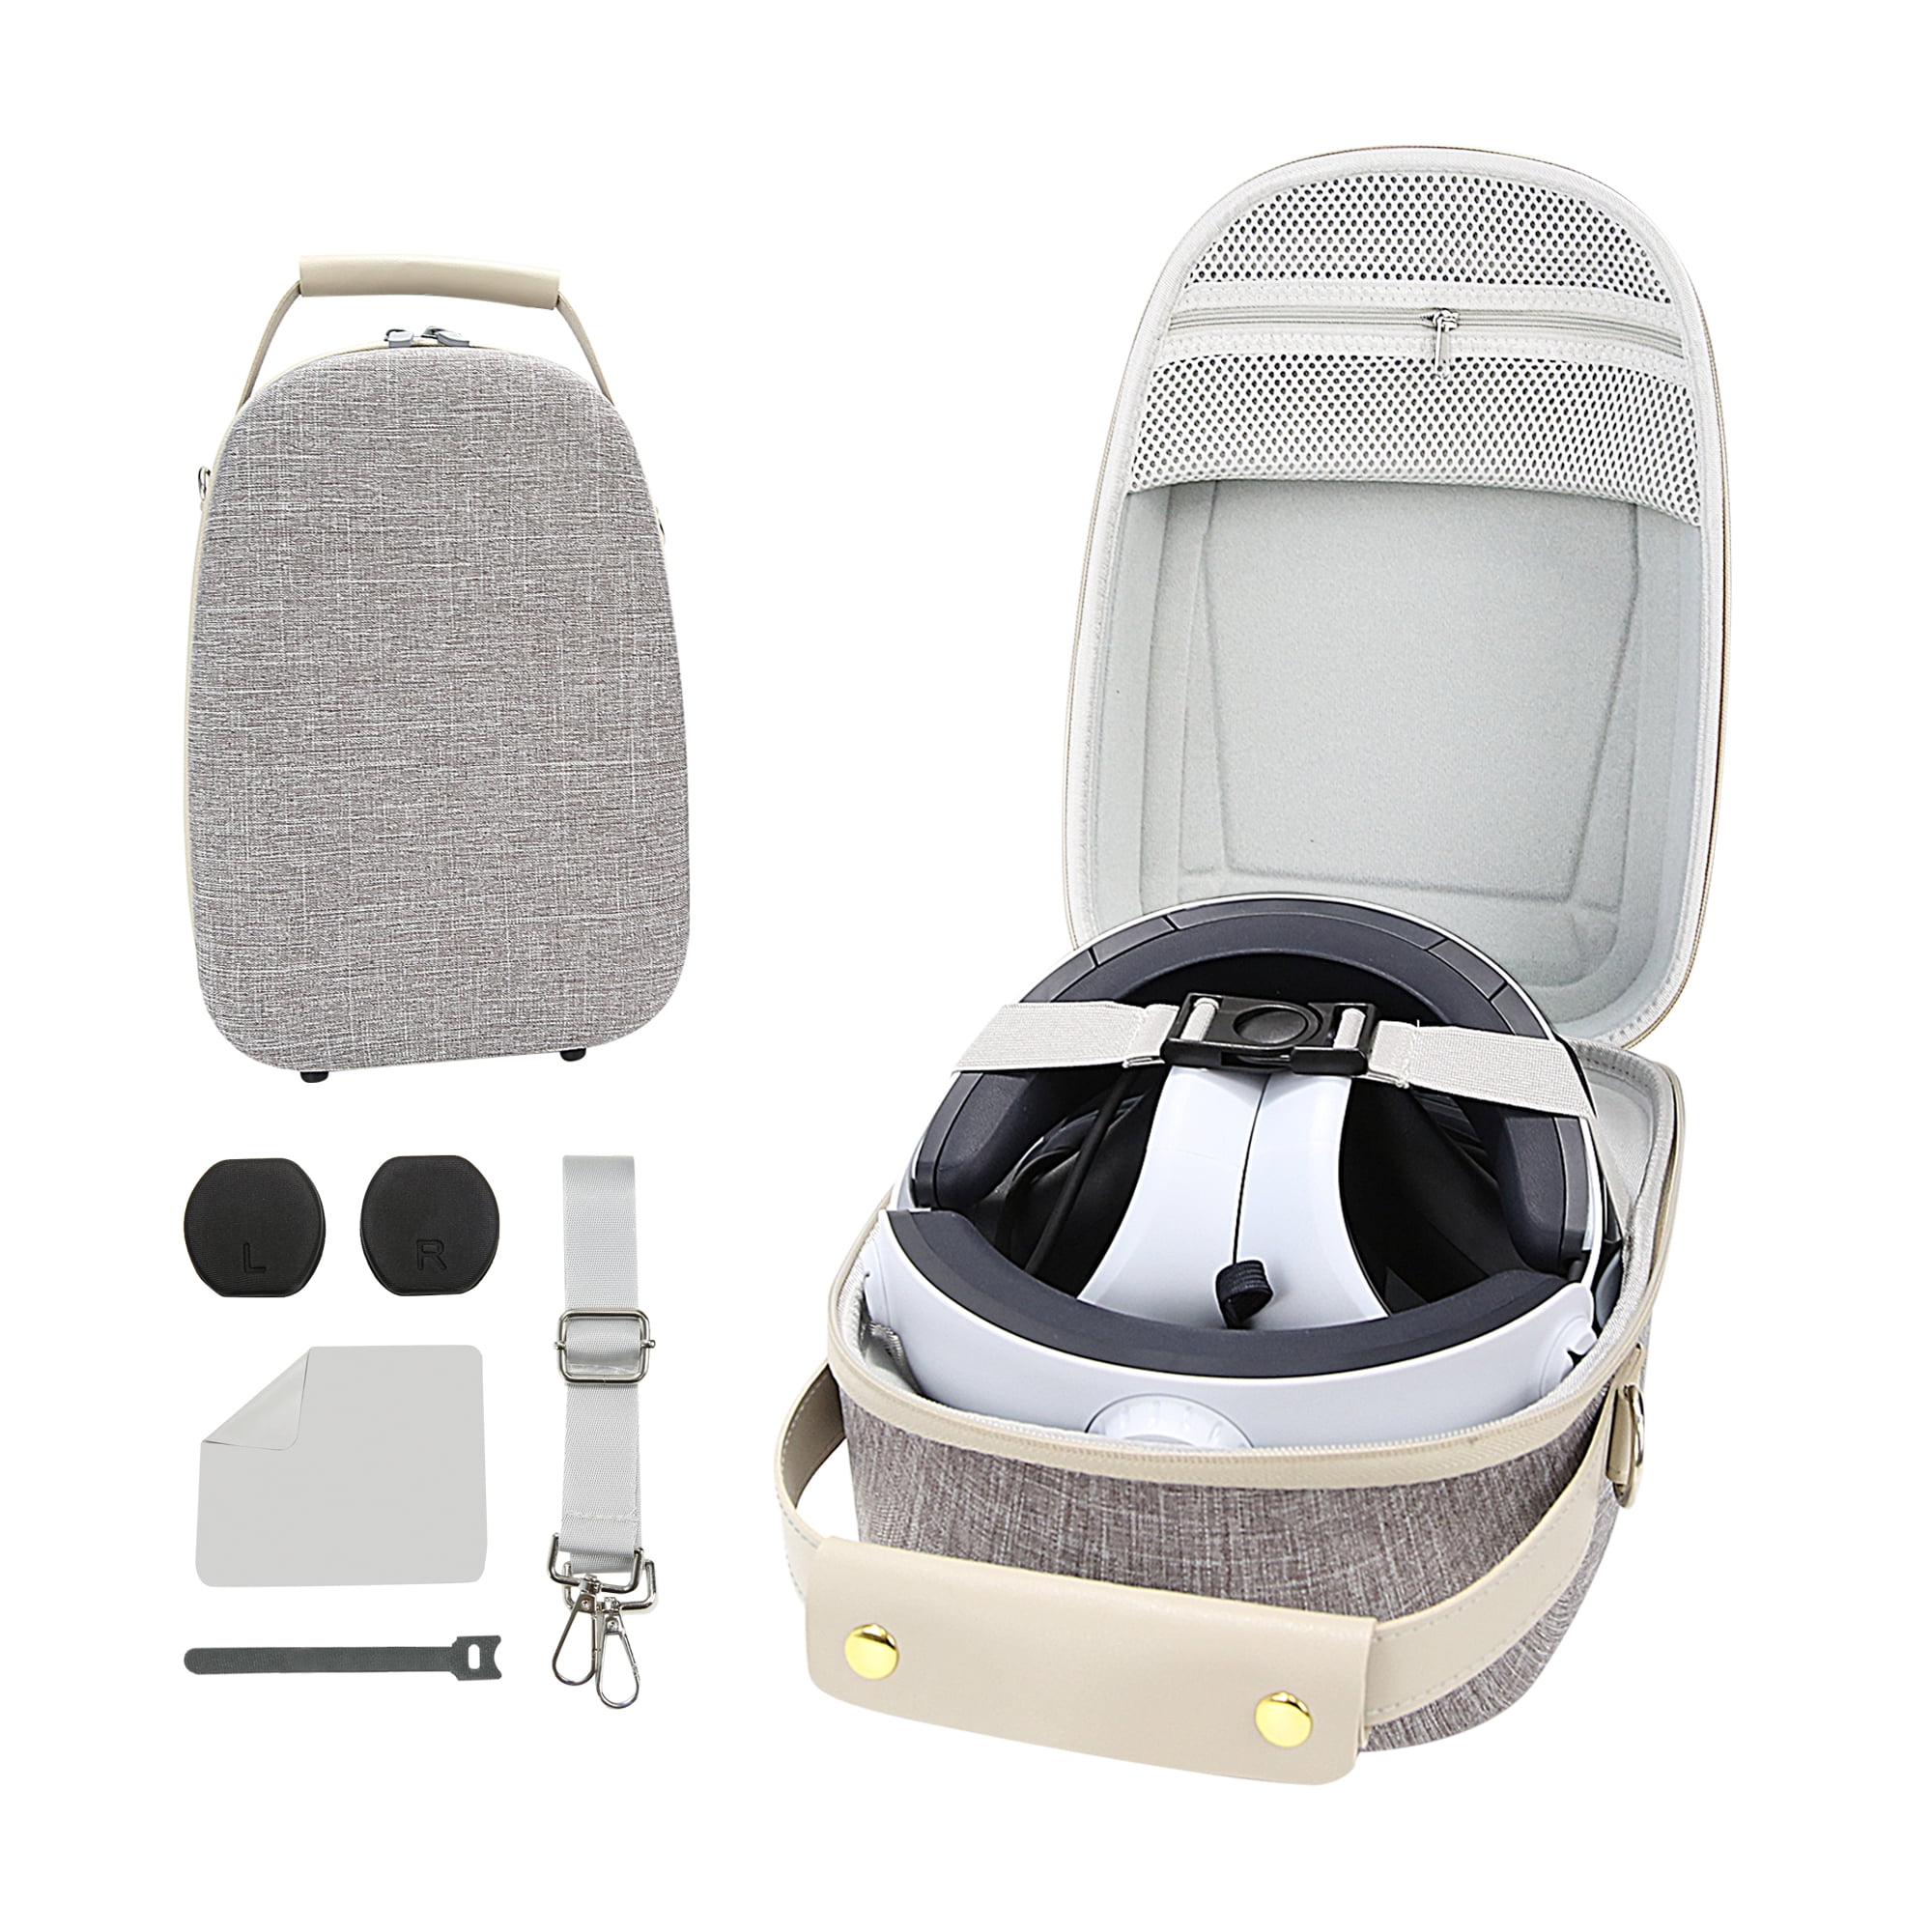 Mytrix VR2 Hard Shell Carrying Case Playstation VR2 Travel Storage Bag with  Shoulder Strap, Fits PSVR2 Headset &Sense Controller Accessories, Gift for  